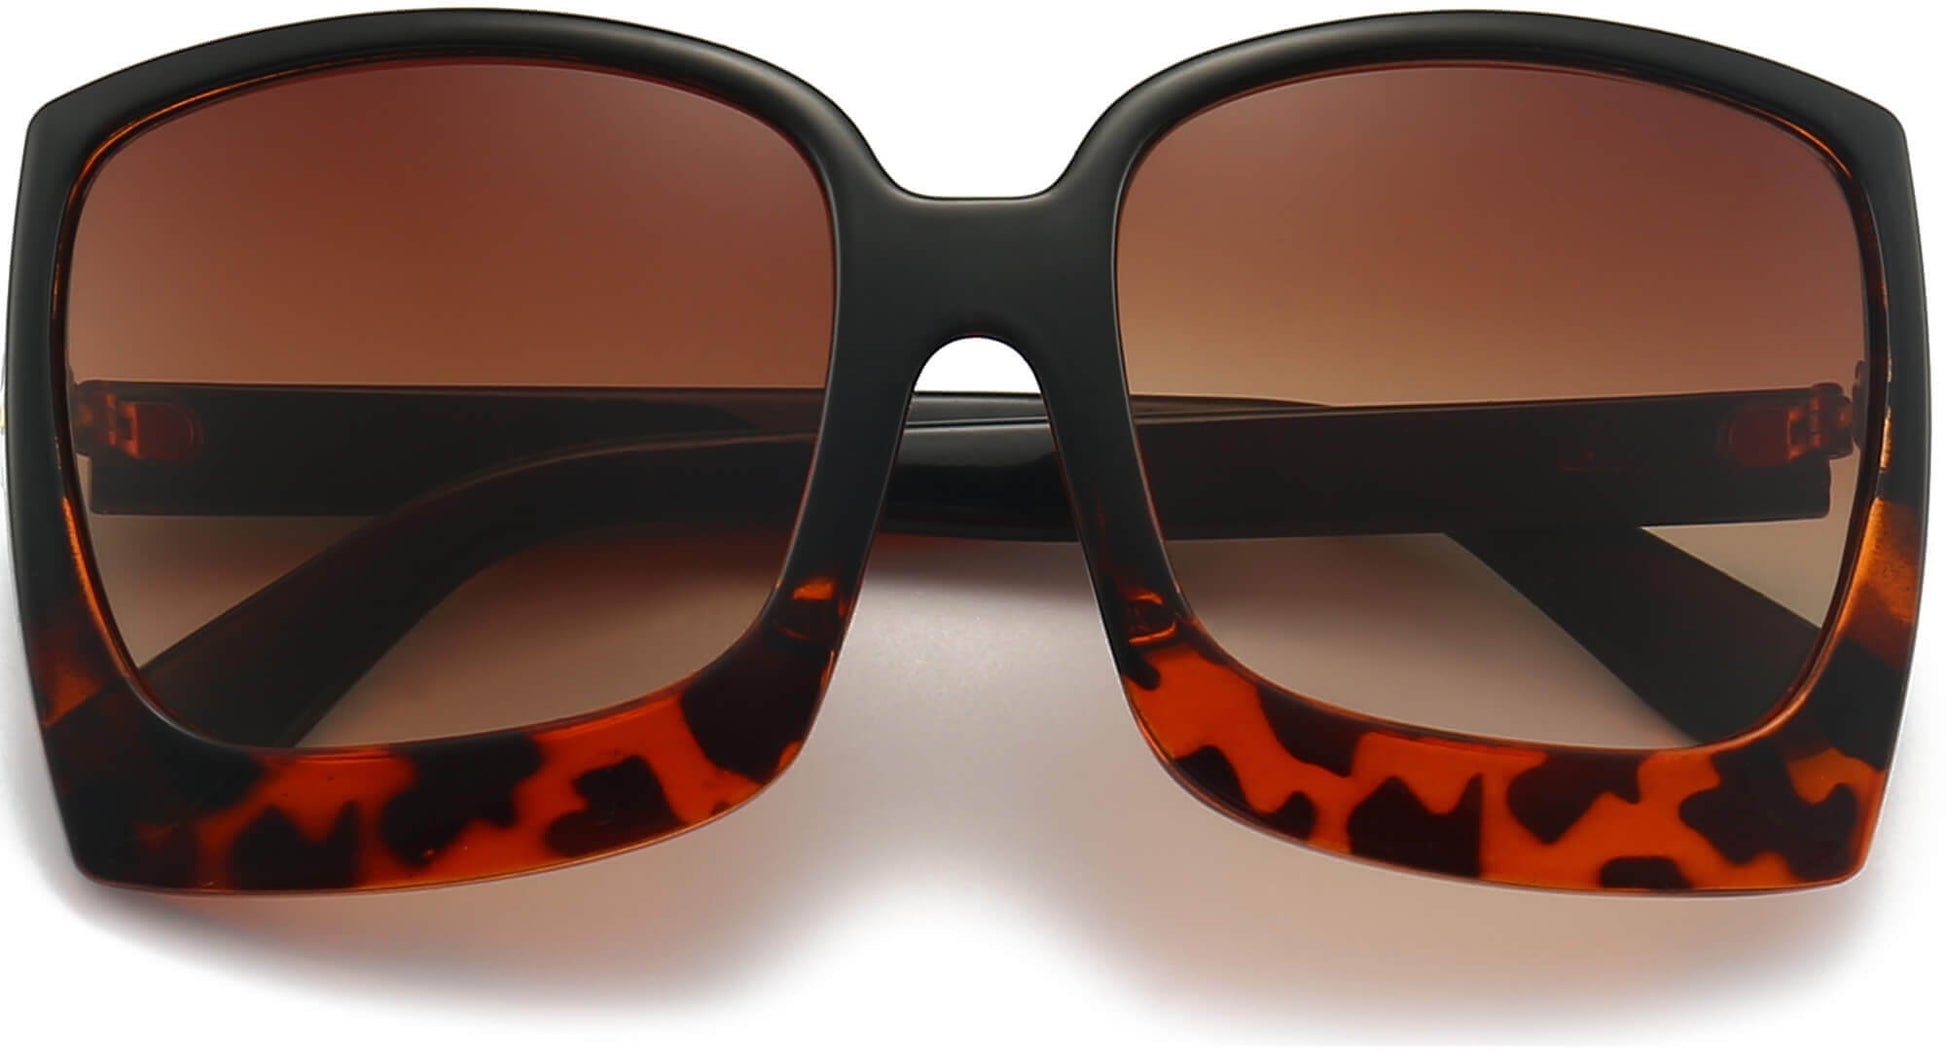 Khloe Black Plastic Sunglasses from ANRRI, closed view